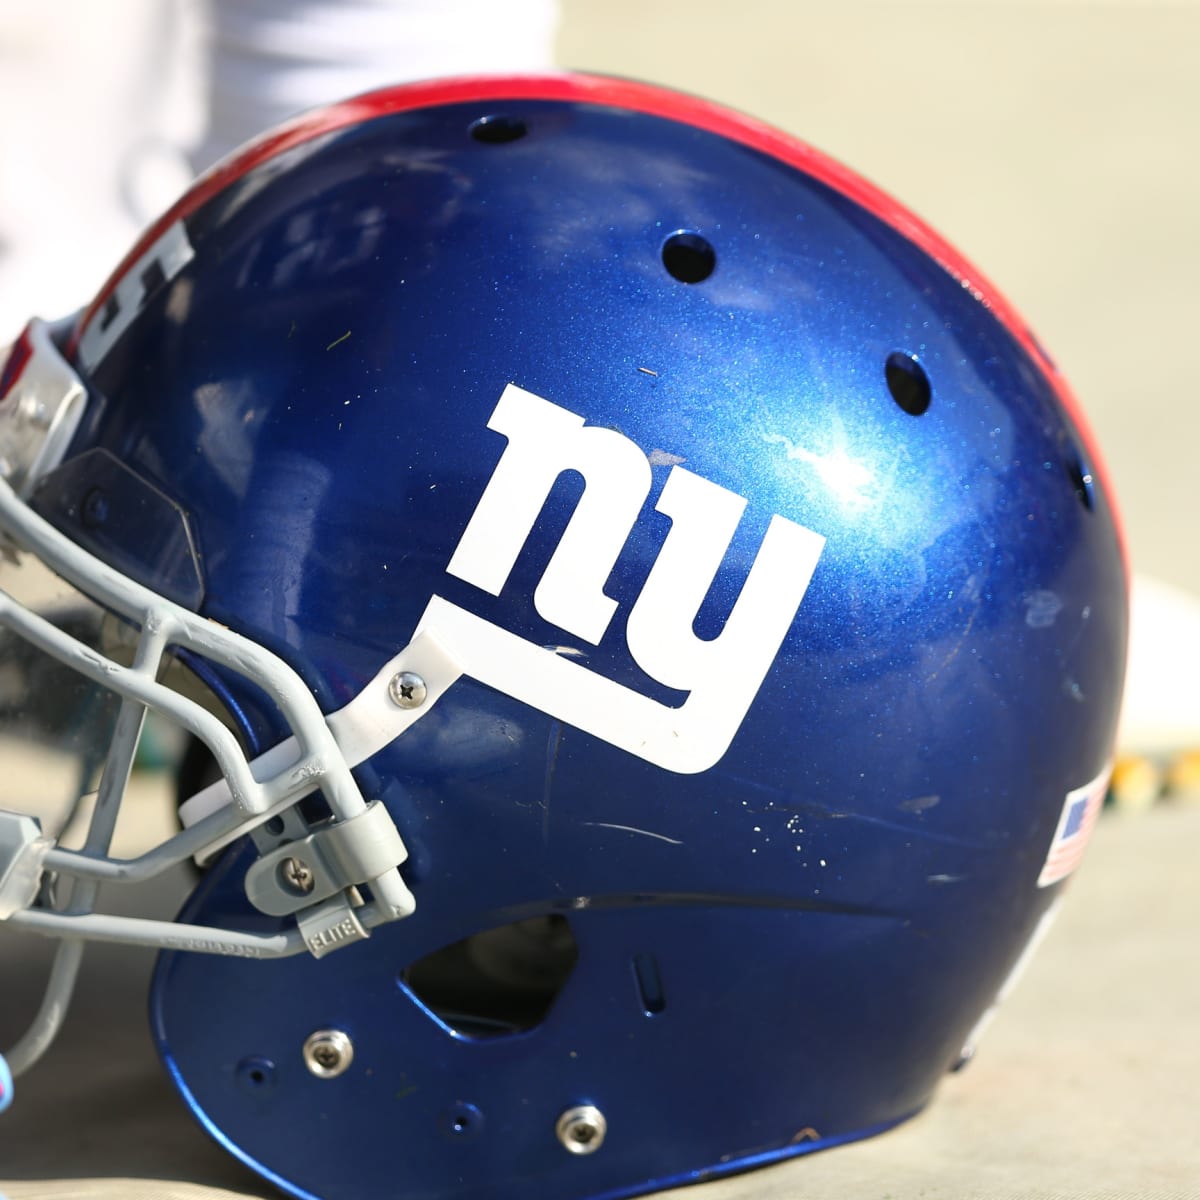 New York Giants' uniforms ranked among NFL's worst